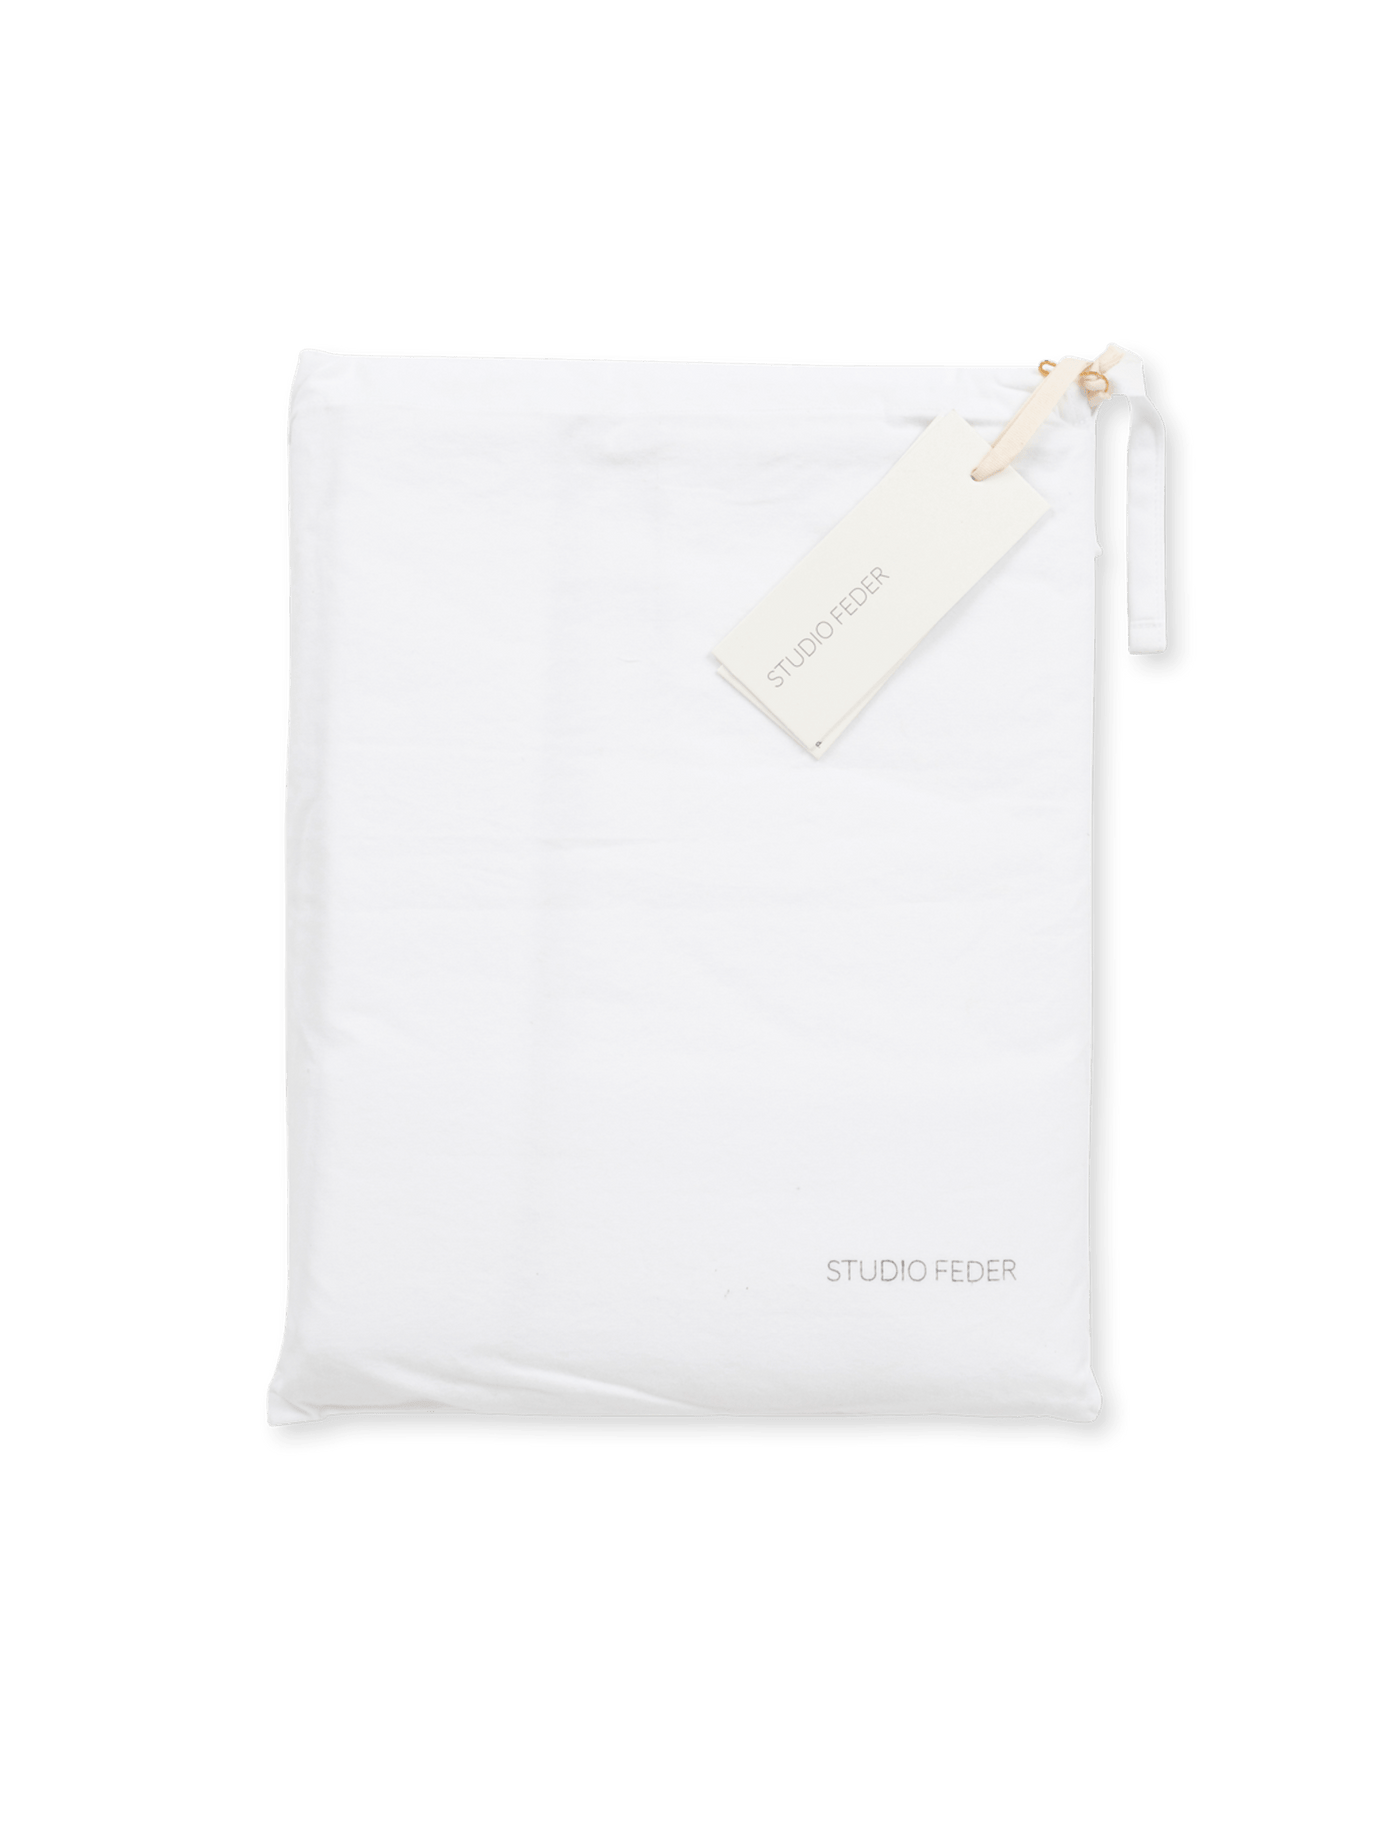 Bedding extra length 140x220 cm - Crisp White